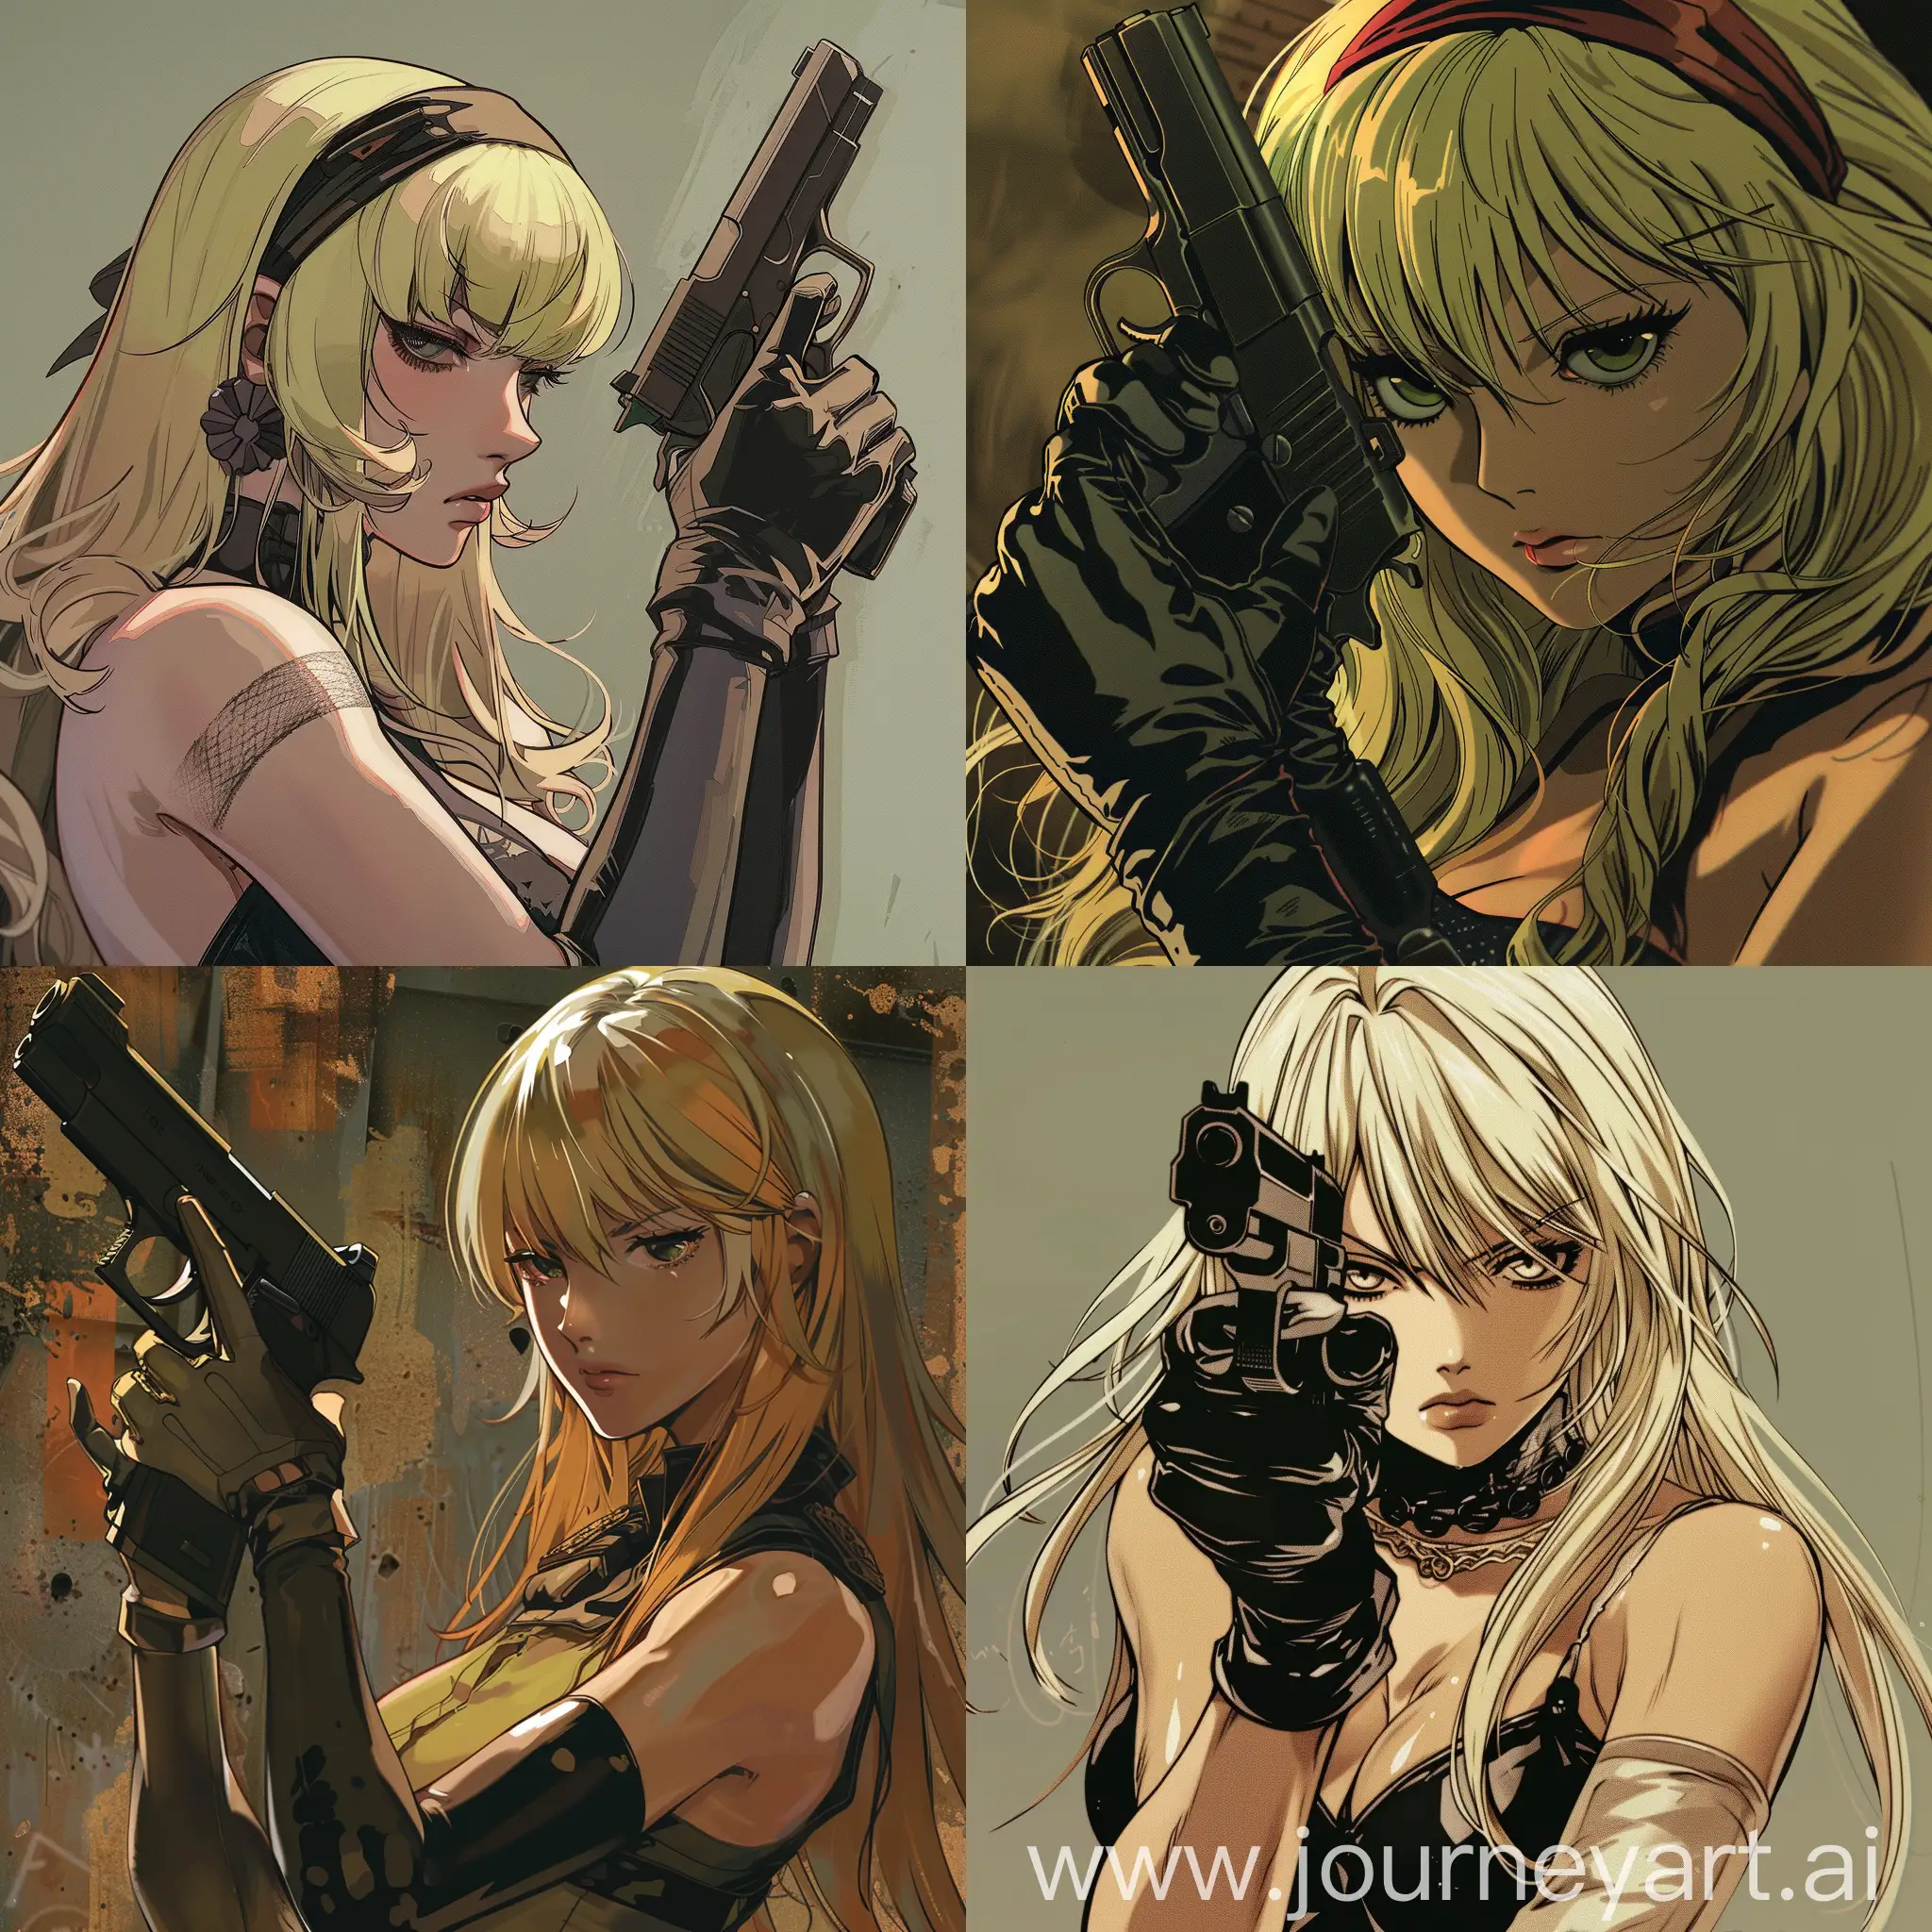 Girl, Retro Anime, Blonde, Black lagoon anime style, wearing gloves, holding a gun